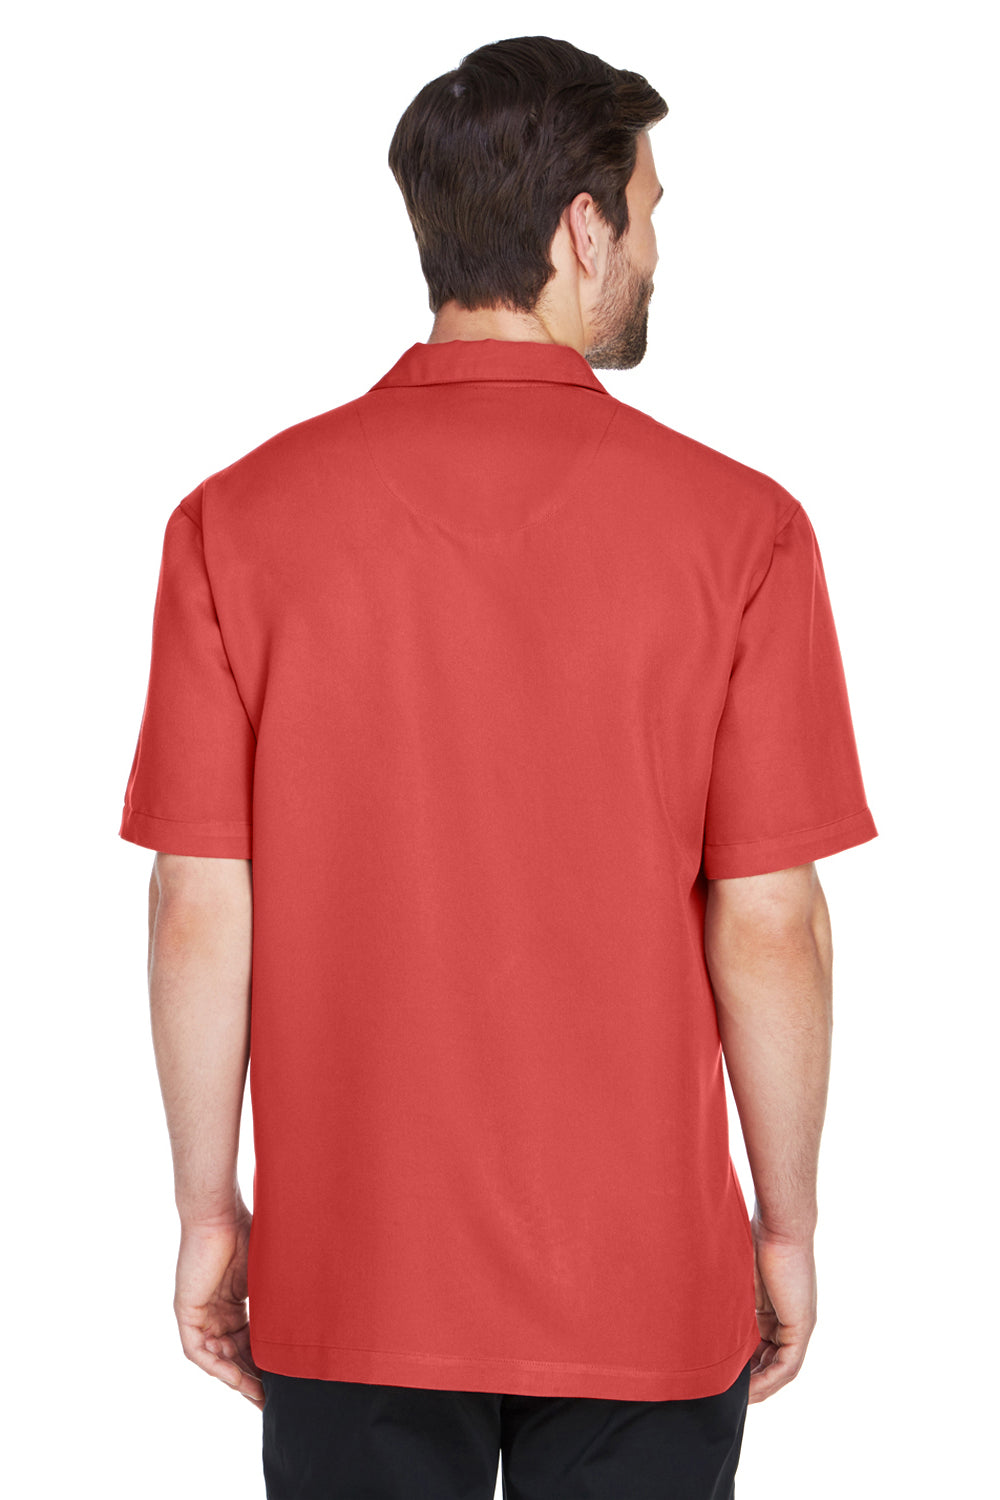 UltraClub 8980 Mens Cabana Breeze Short Sleeve Button Down Camp Shirt w/ Pocket Brick Red Back